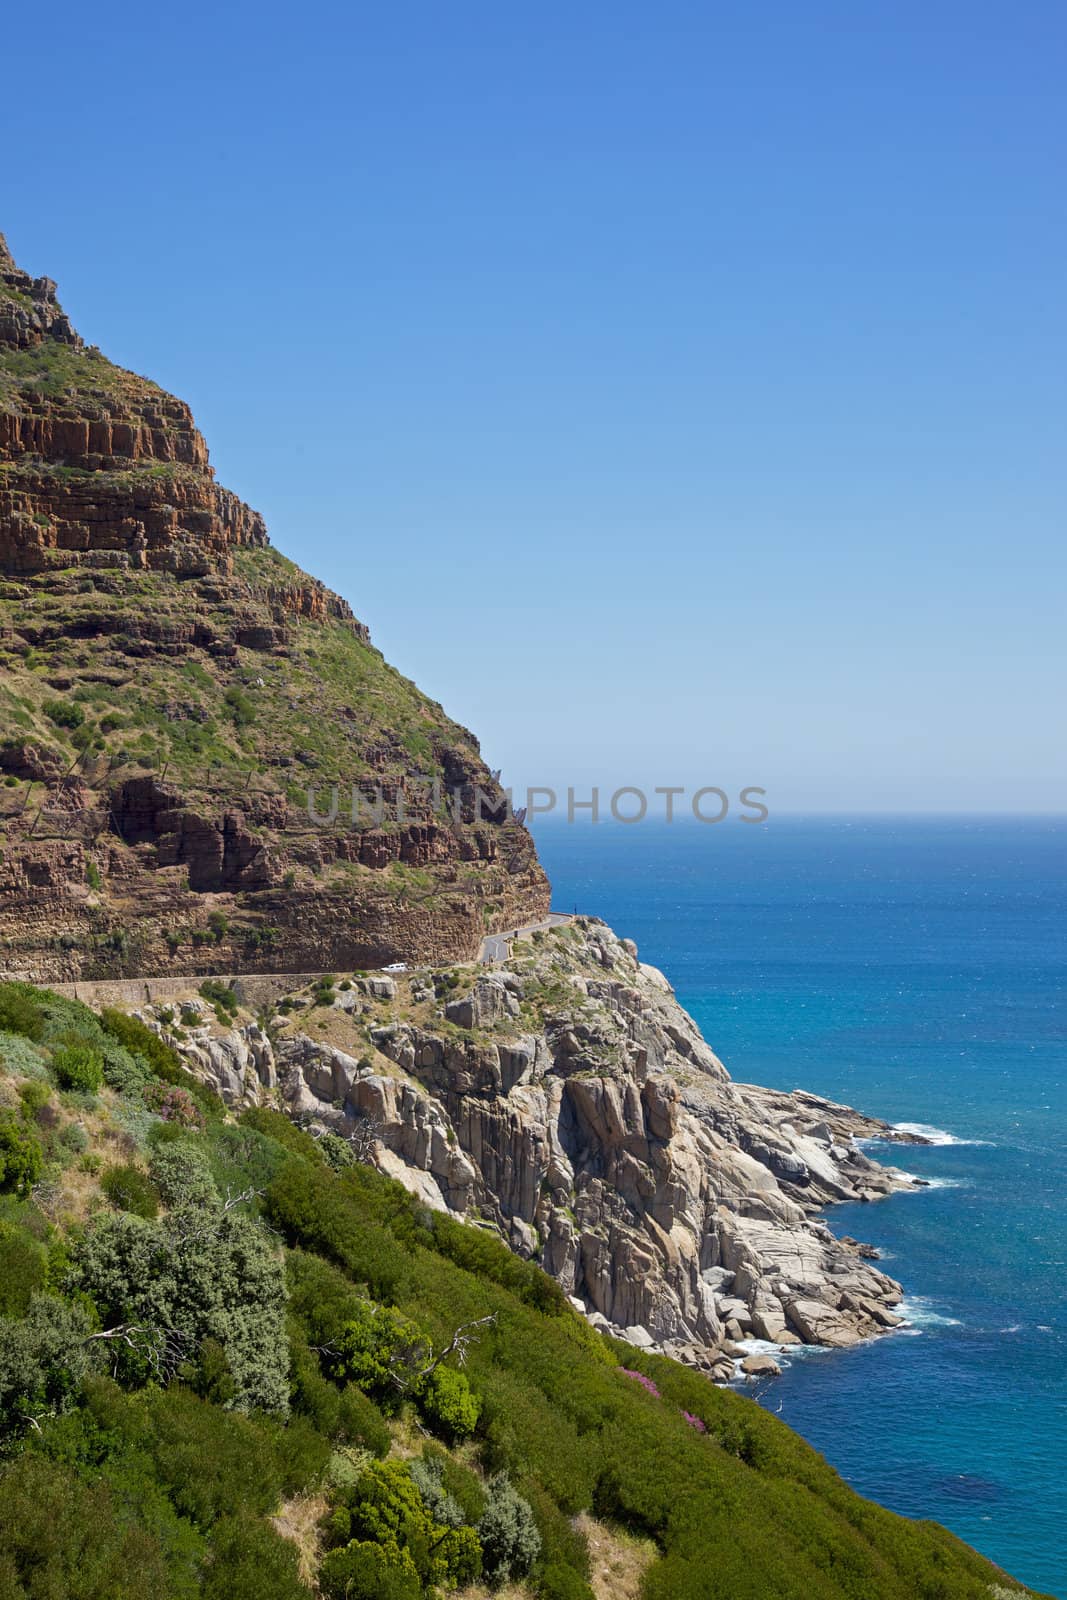 Scenic Chapman's Peak Drive, Cape Peninsula, South Africa.